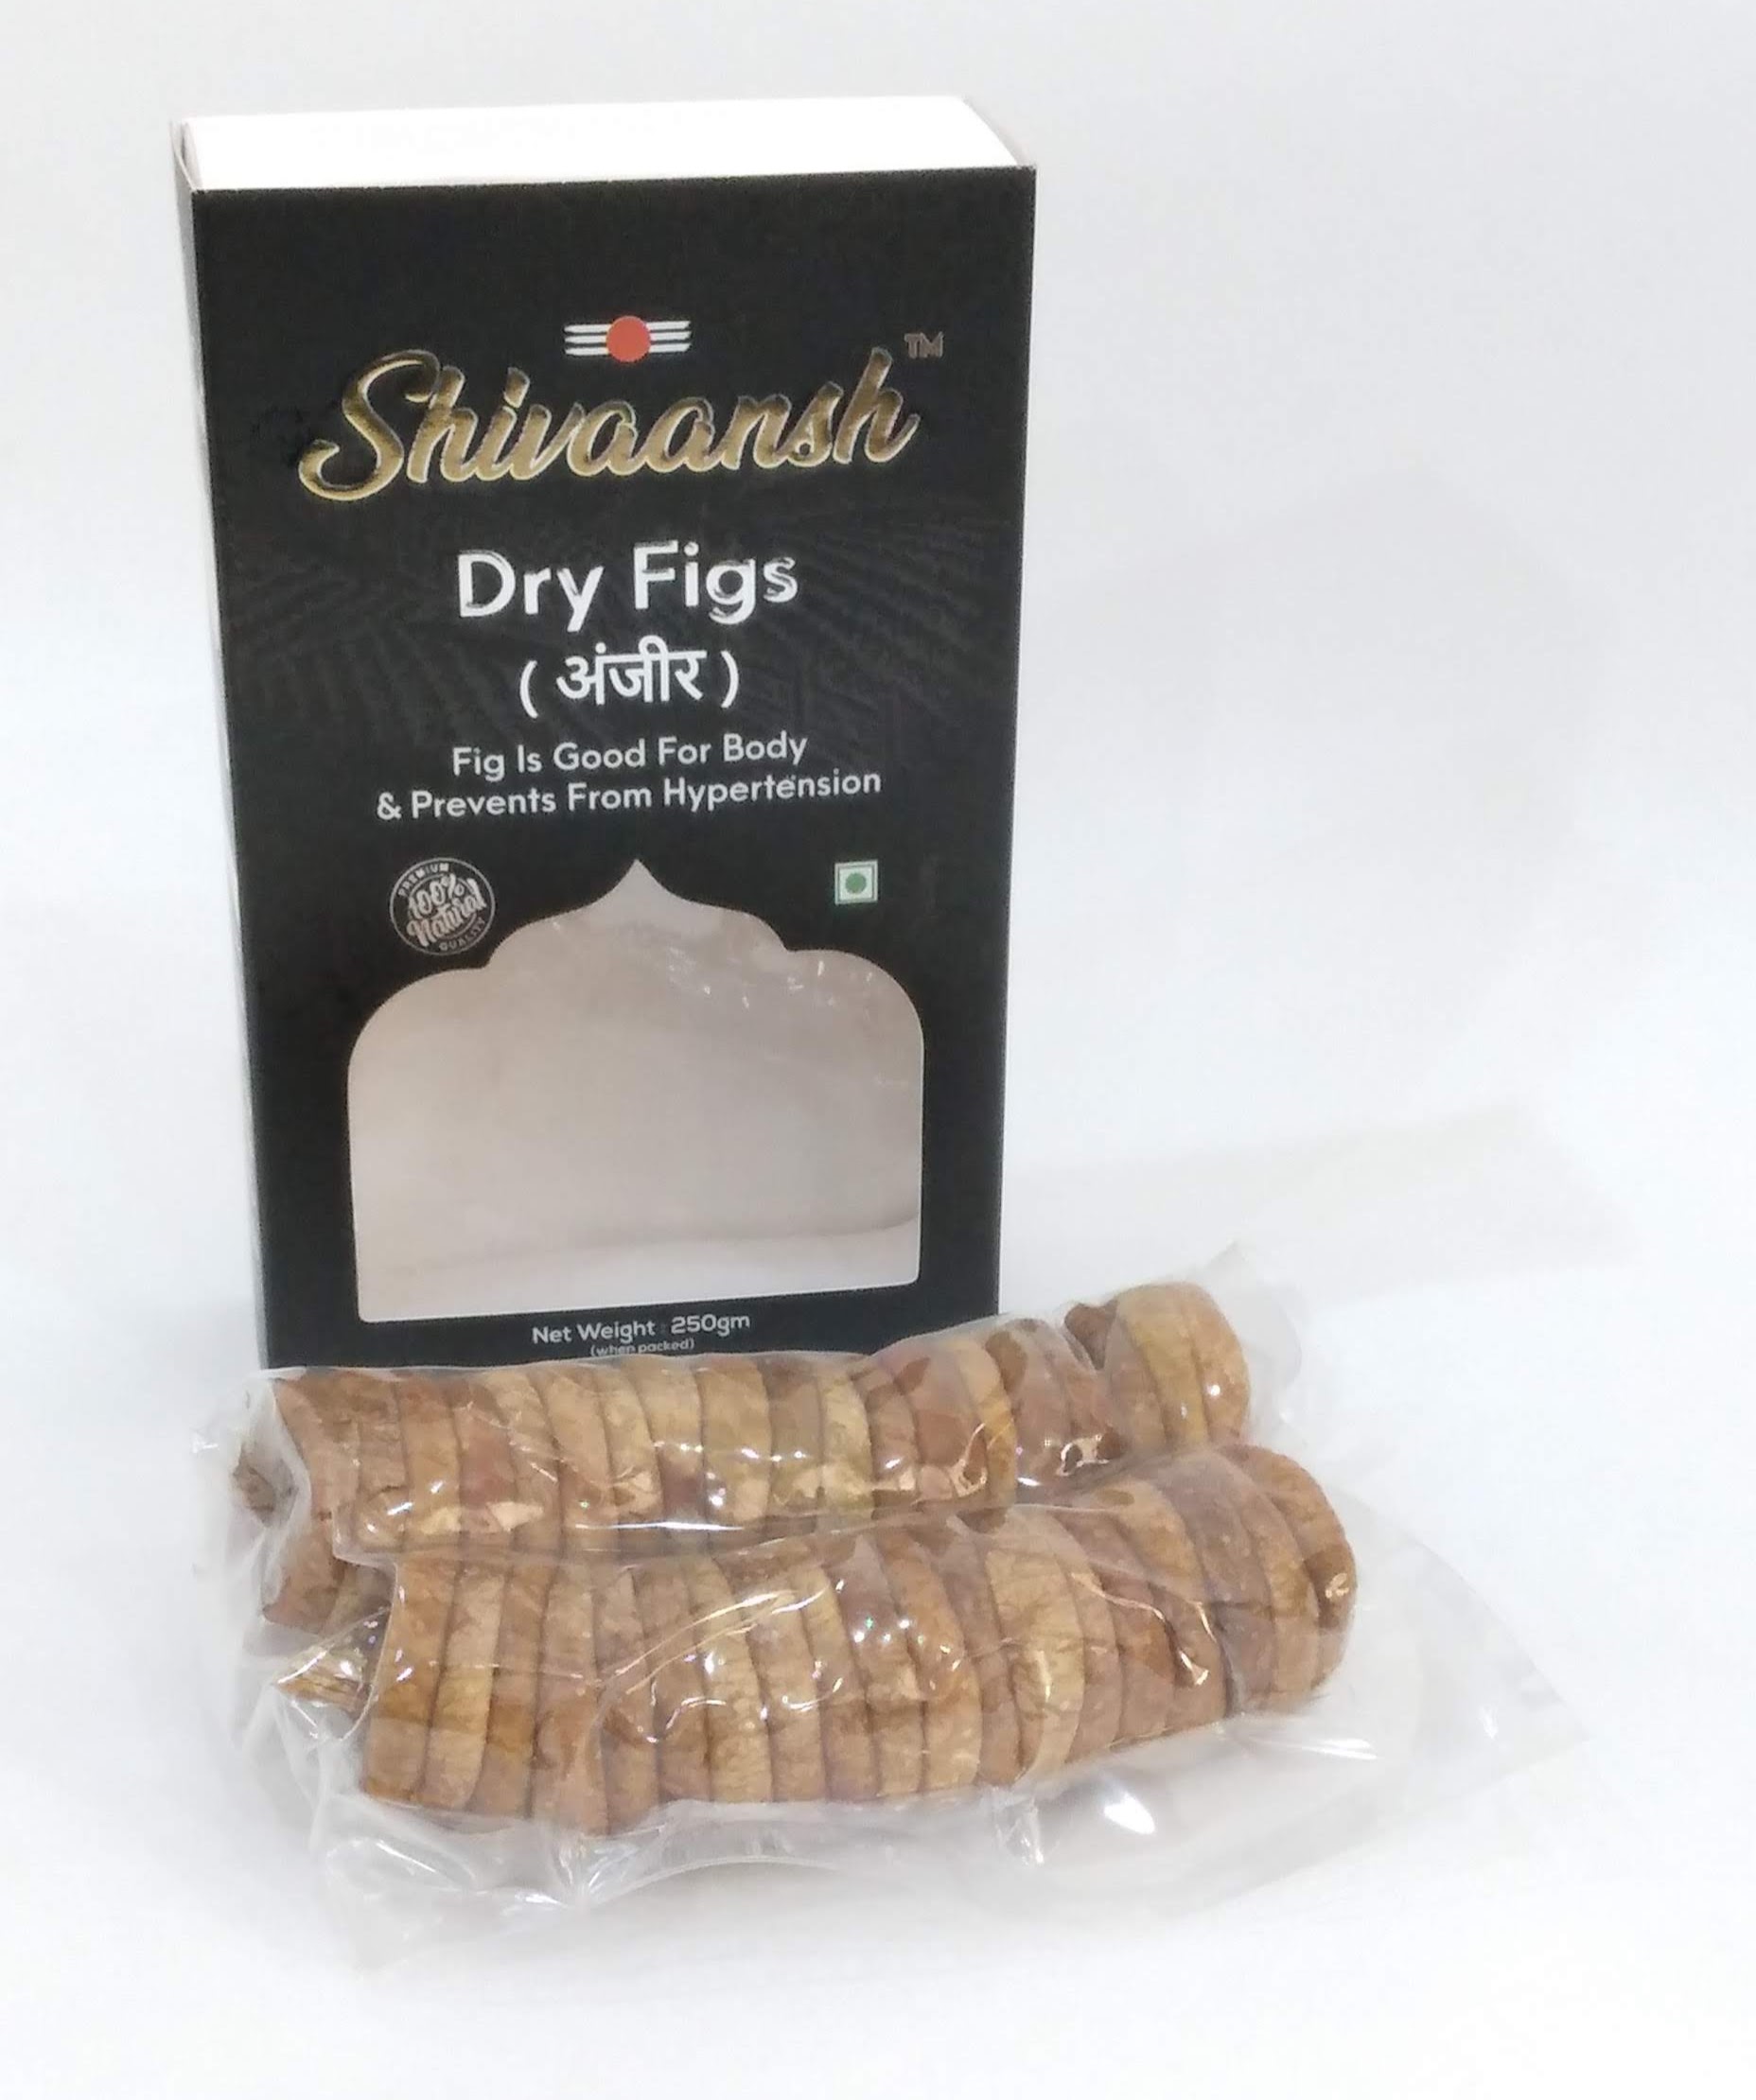 Dry Figs (Shivaansh dry figs)